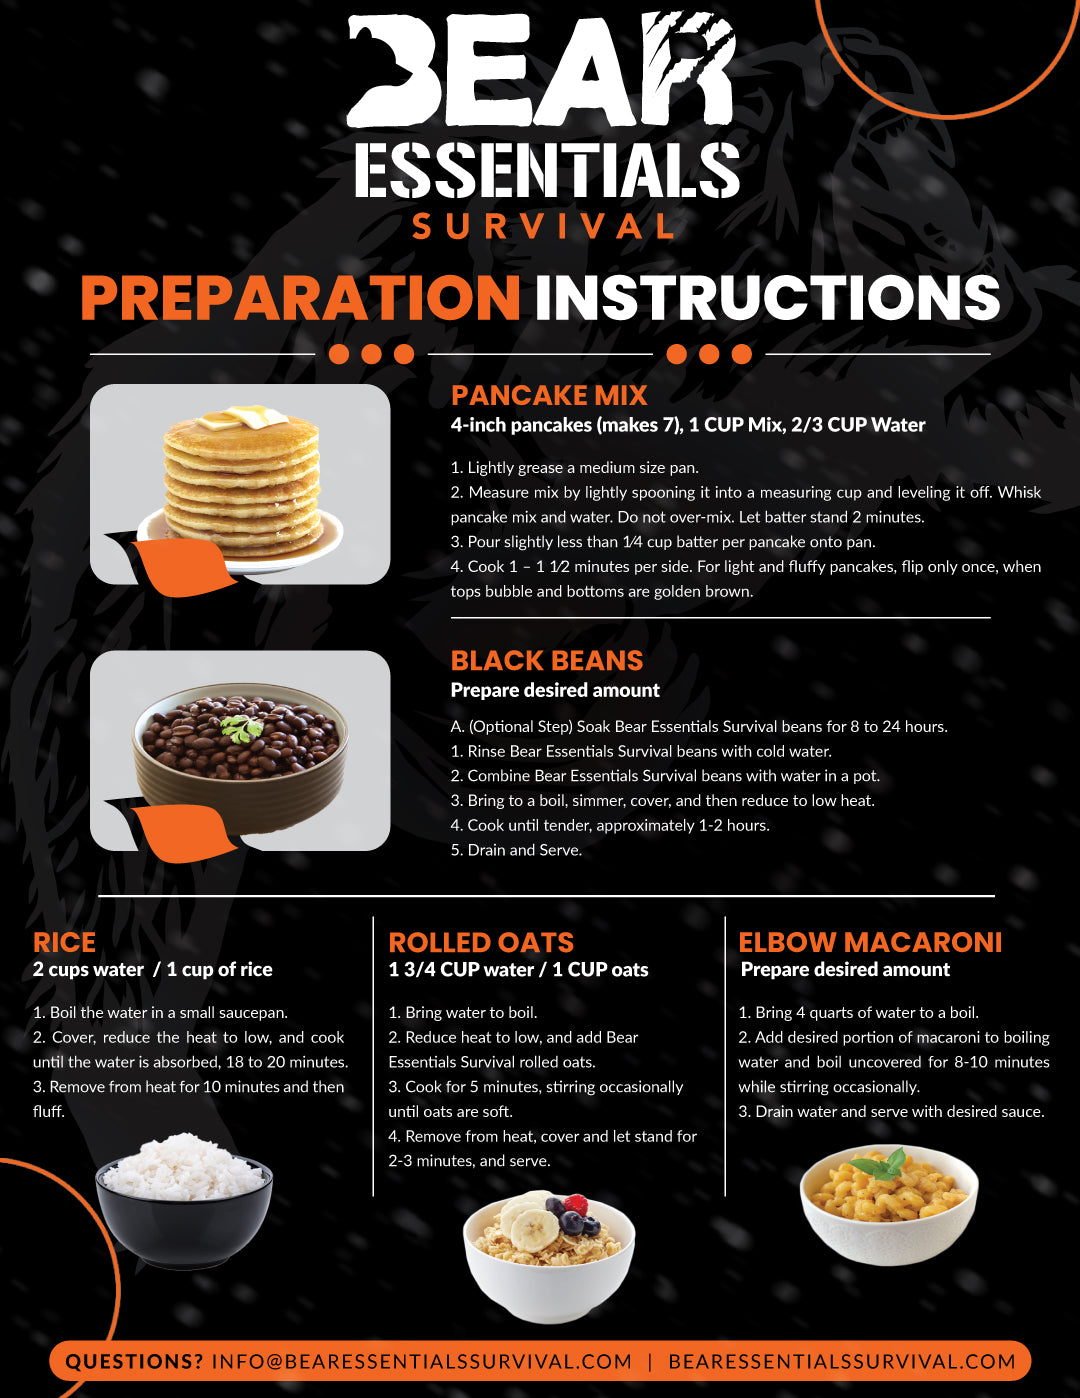 Bear Essentials Survival Preparation Instructions